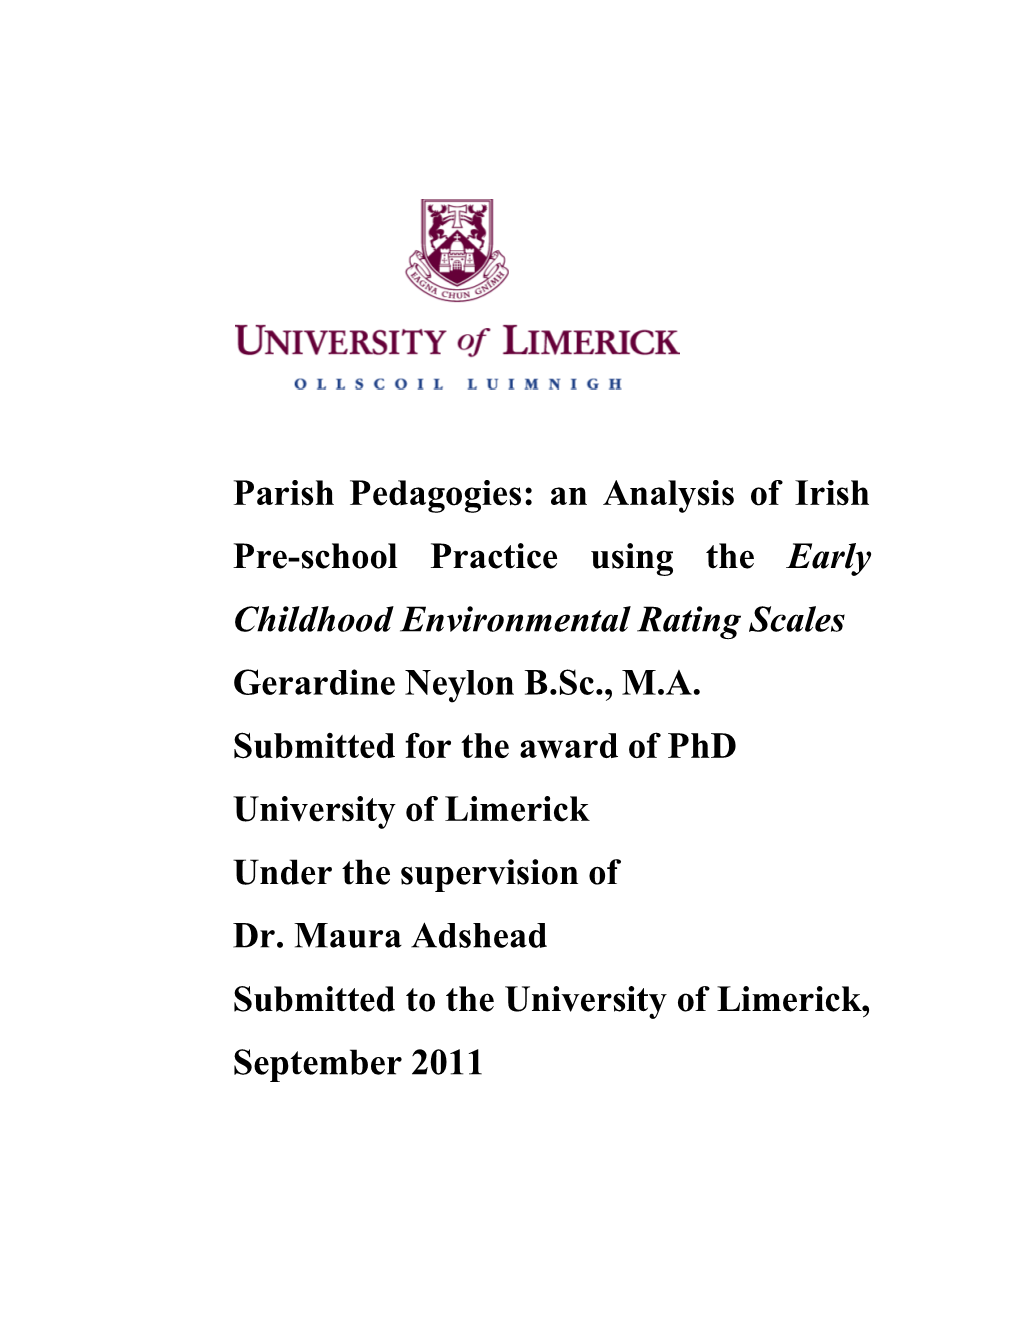 Parish Pedagogies: an Analysis of Irish Pre-School Practice Using the Early Childhood Environmental Rating Scales Gerardine Neylon B.Sc., M.A